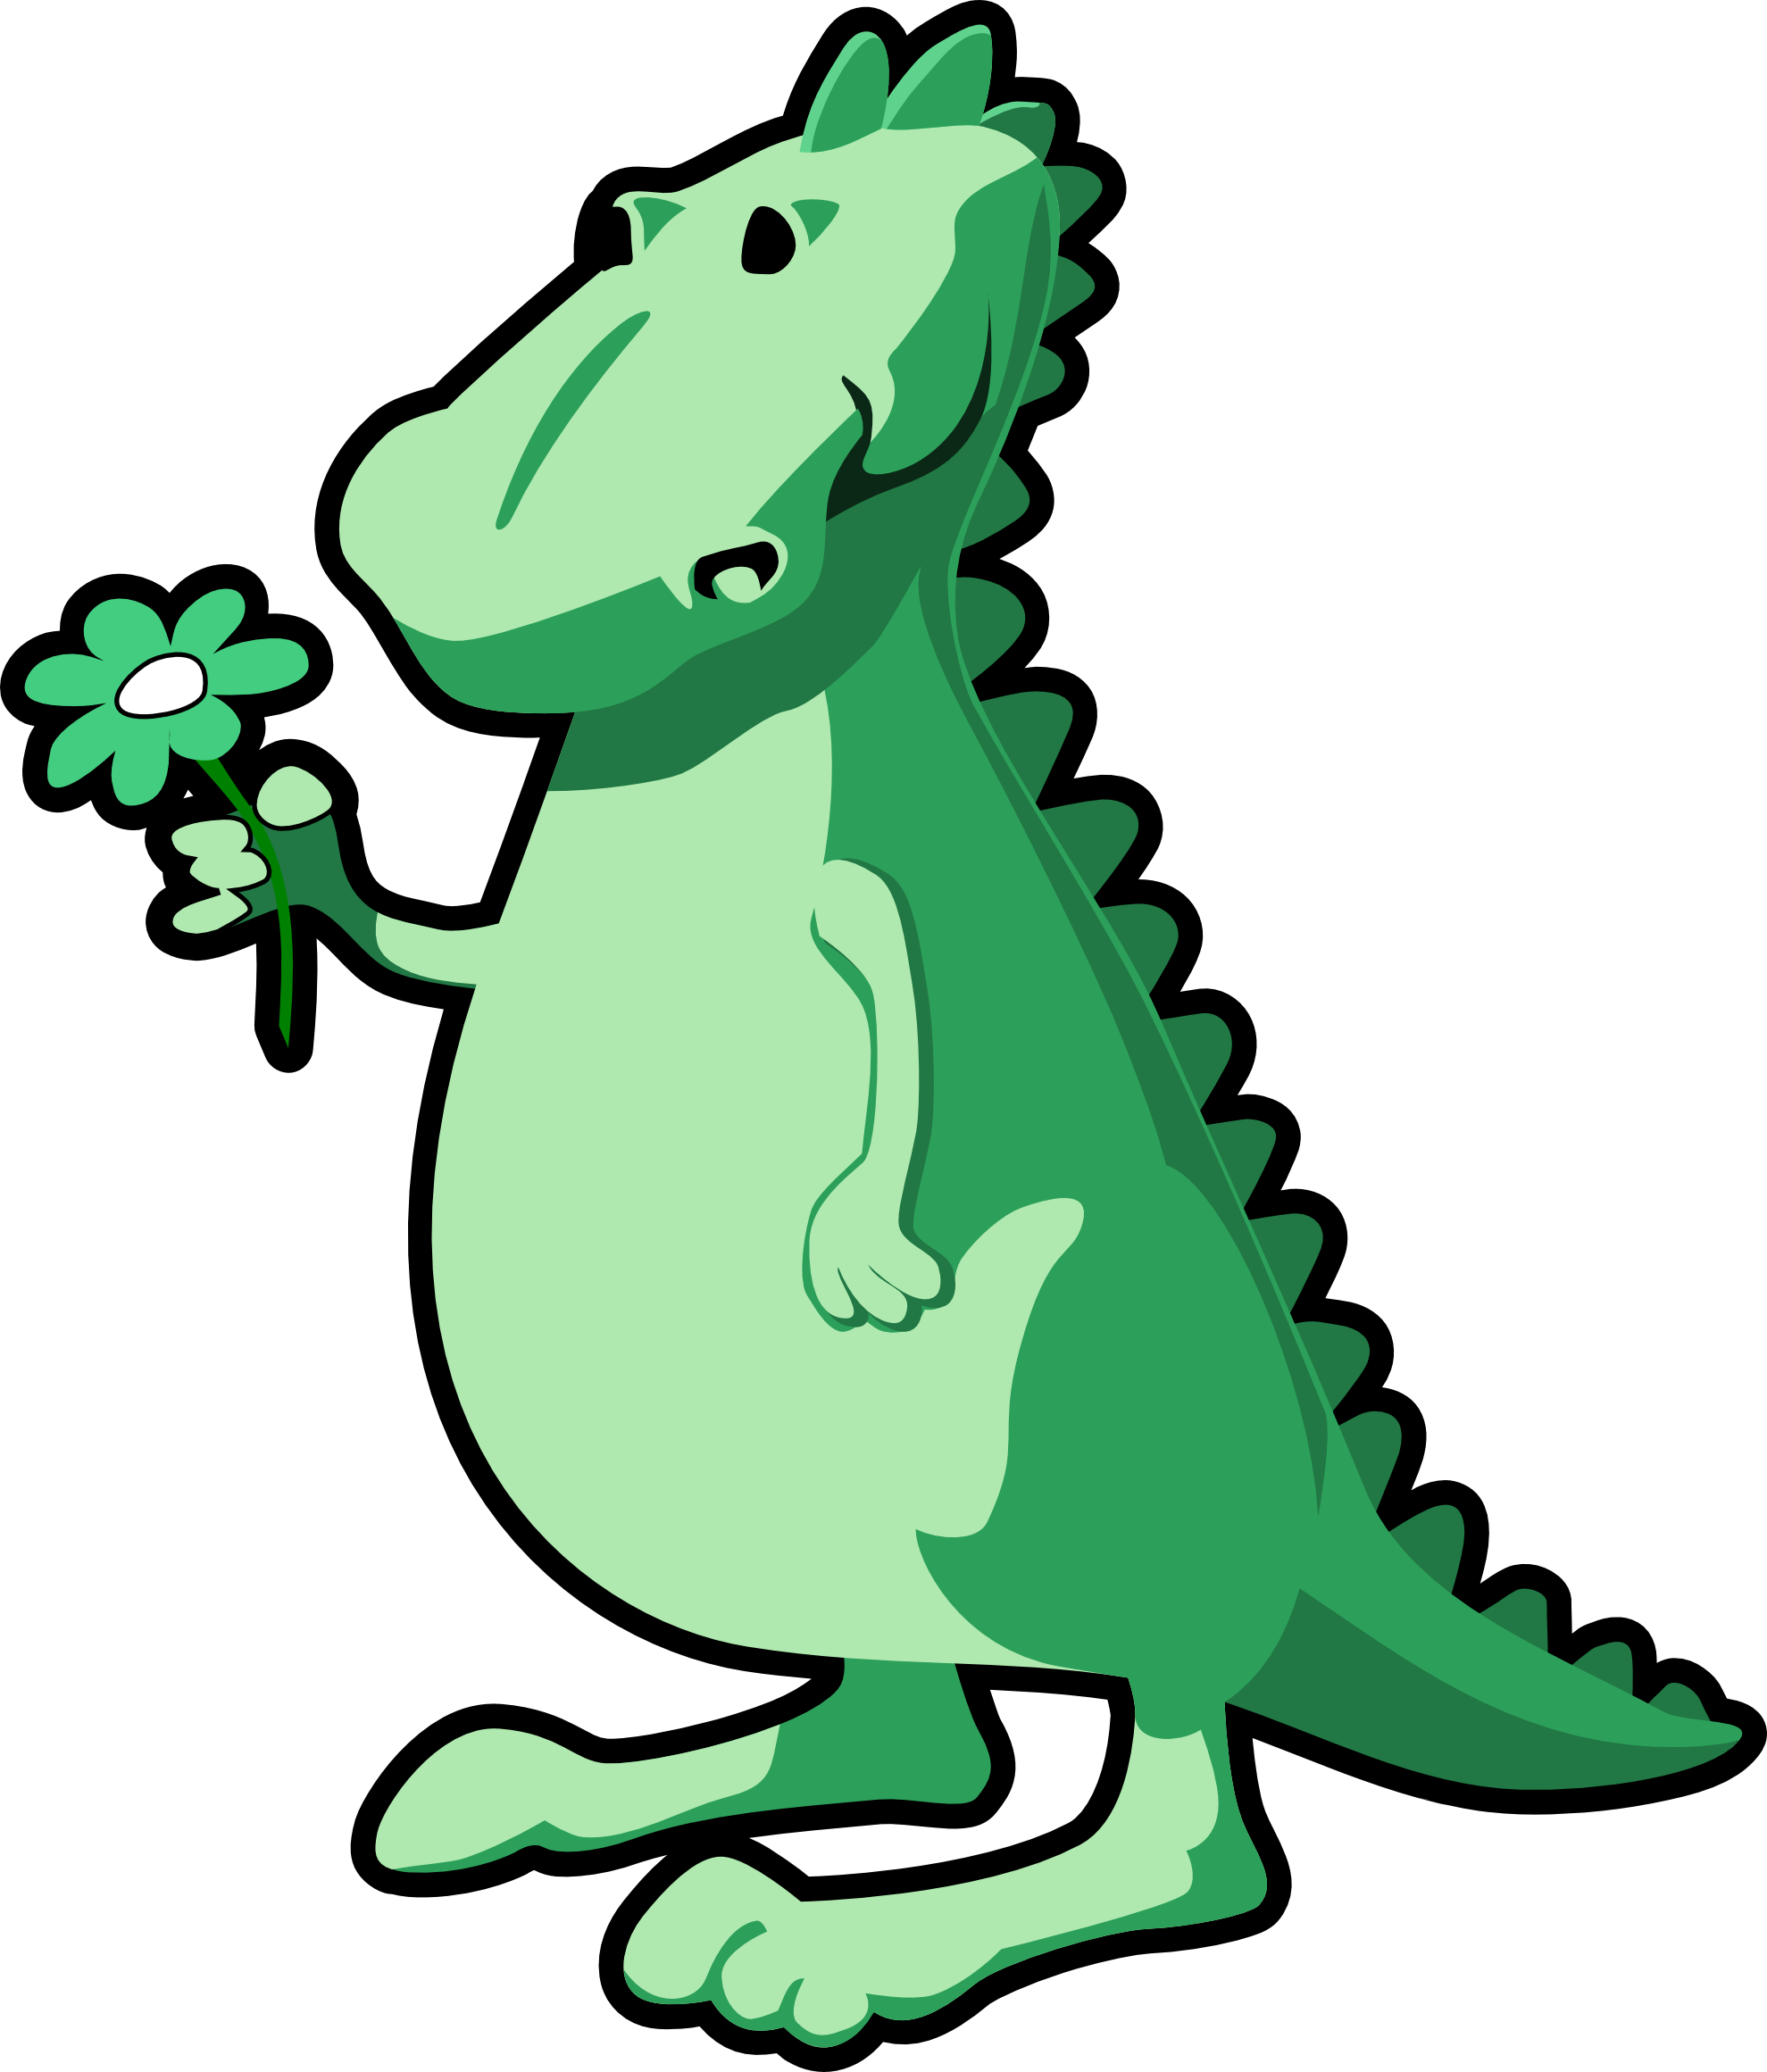 Dragon Lizard Dinosaur with Flower Sea Green 3 xochi.info ...